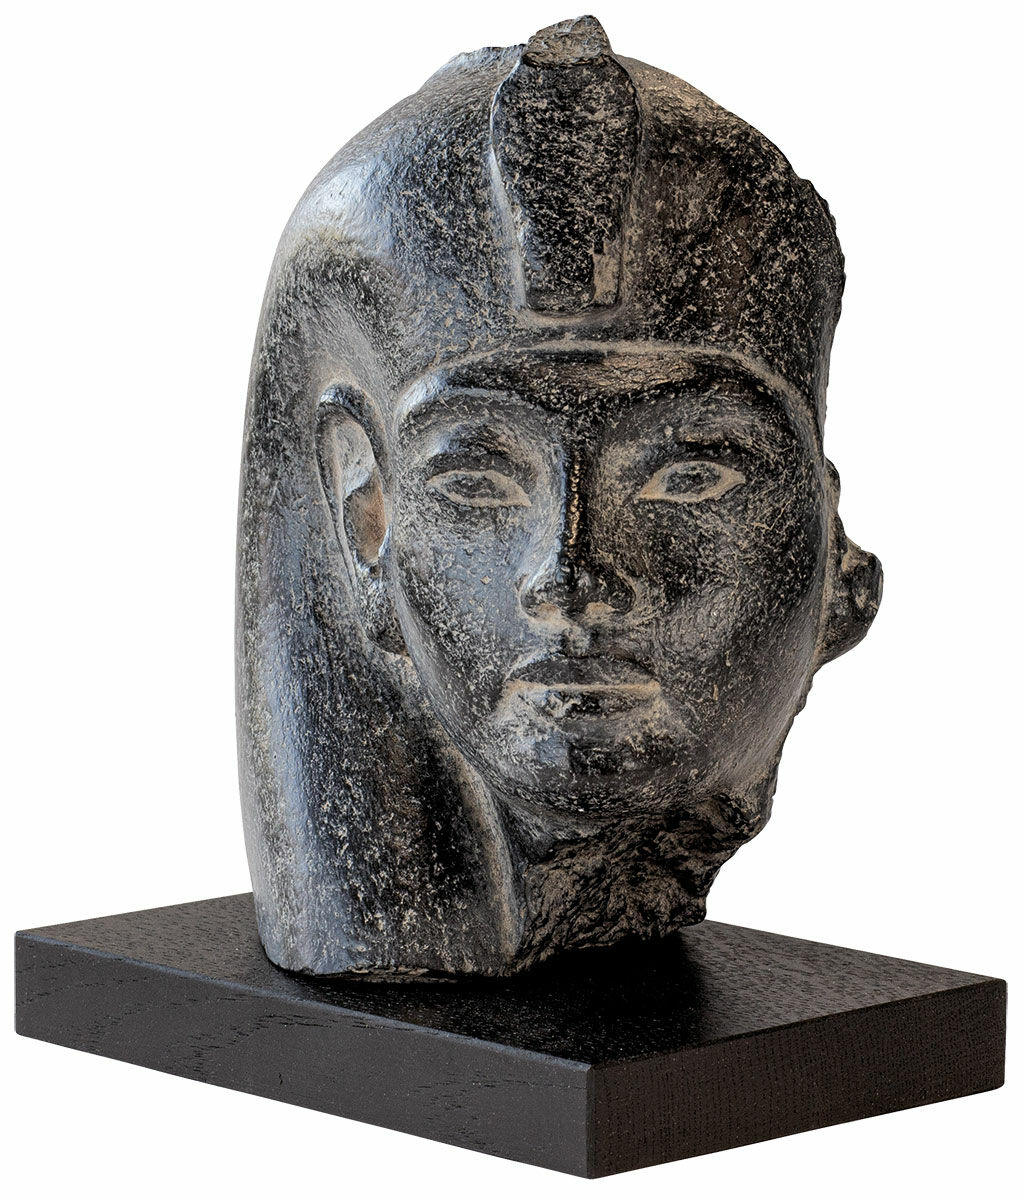 Skulptur "Tutankhamons hoved", støbt